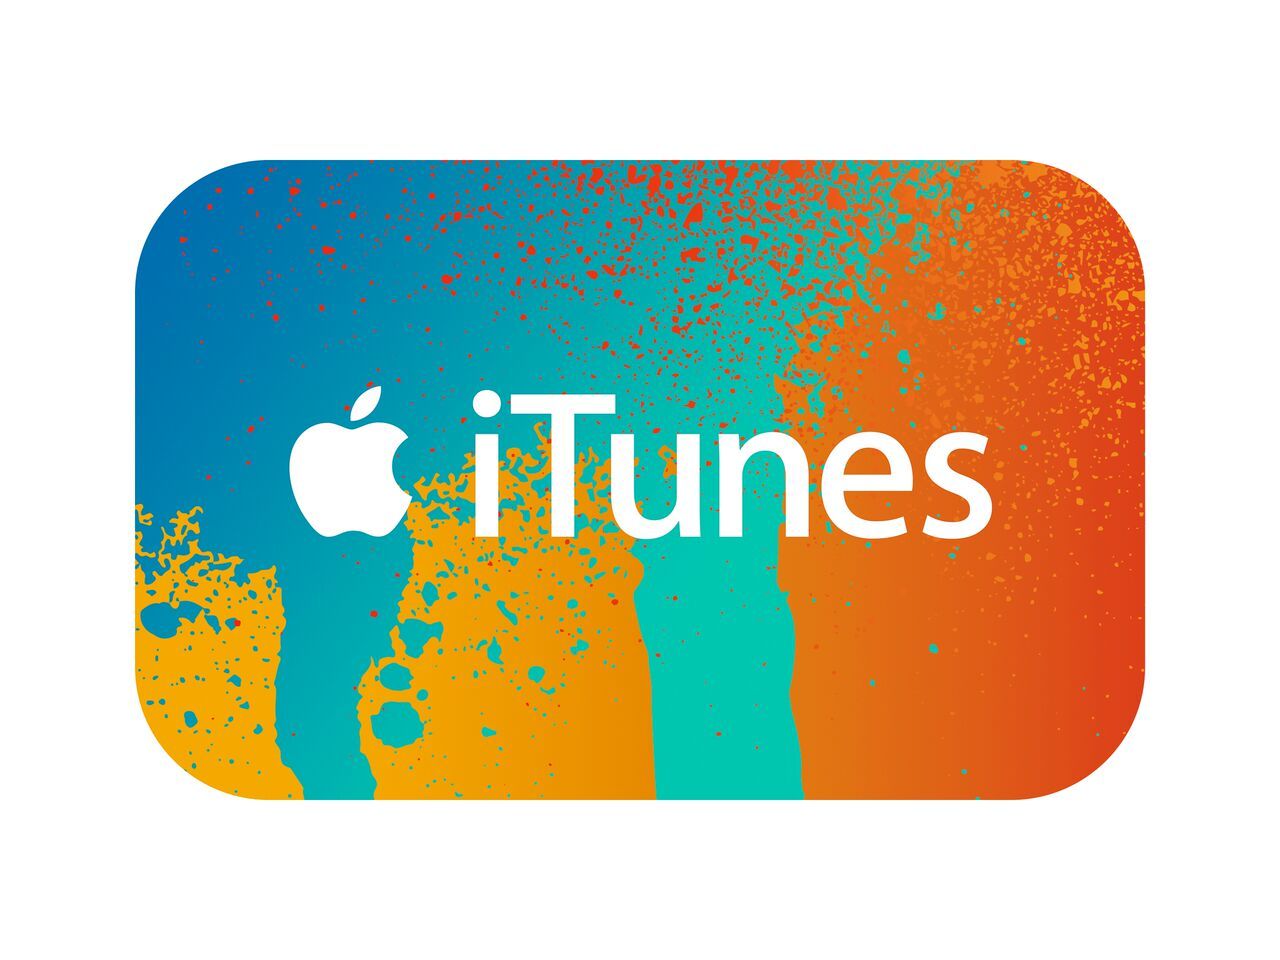 ⚡️ Apple iTunes Gift Card (RU) 4000 rub. PRICE✅